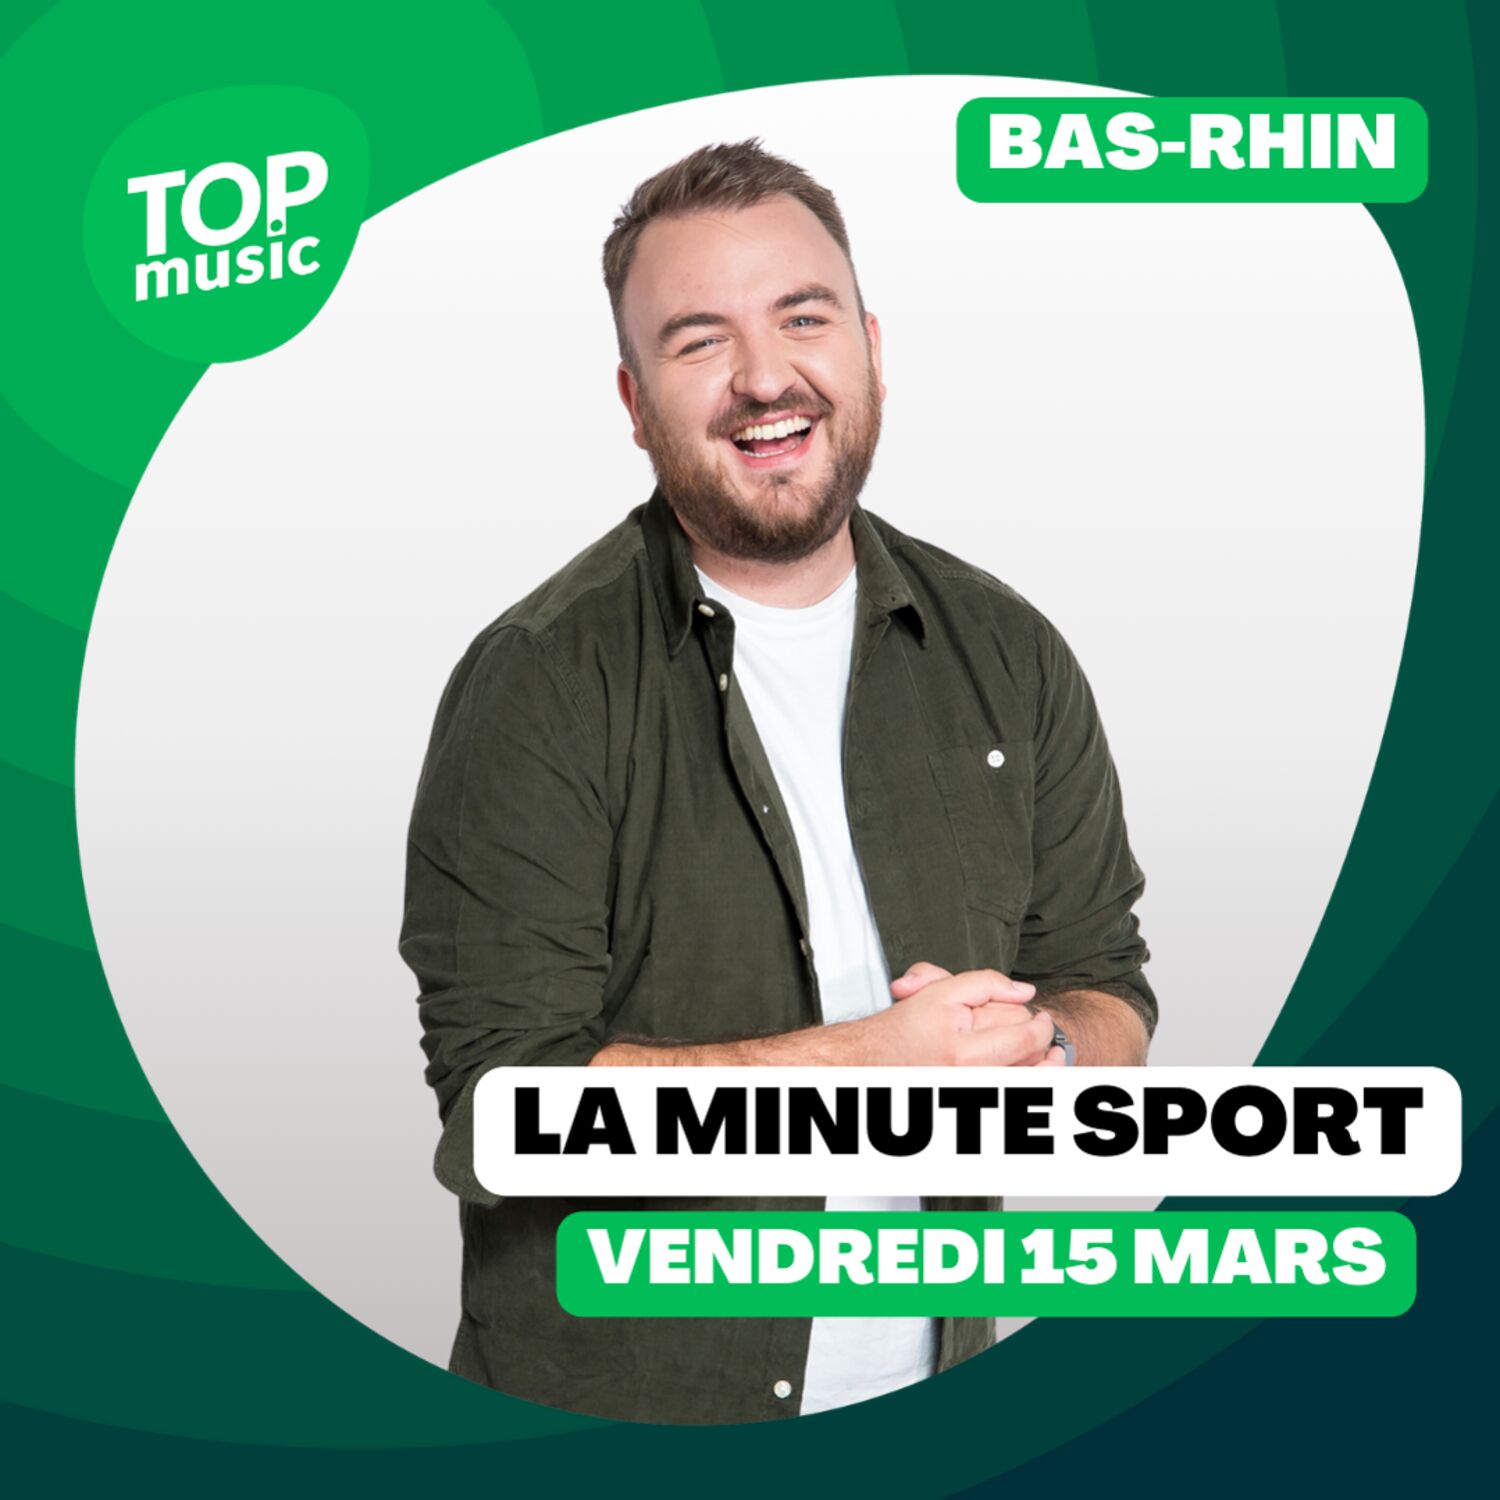 La Minute sport du Bas-Rhin - vendredi 15 mars